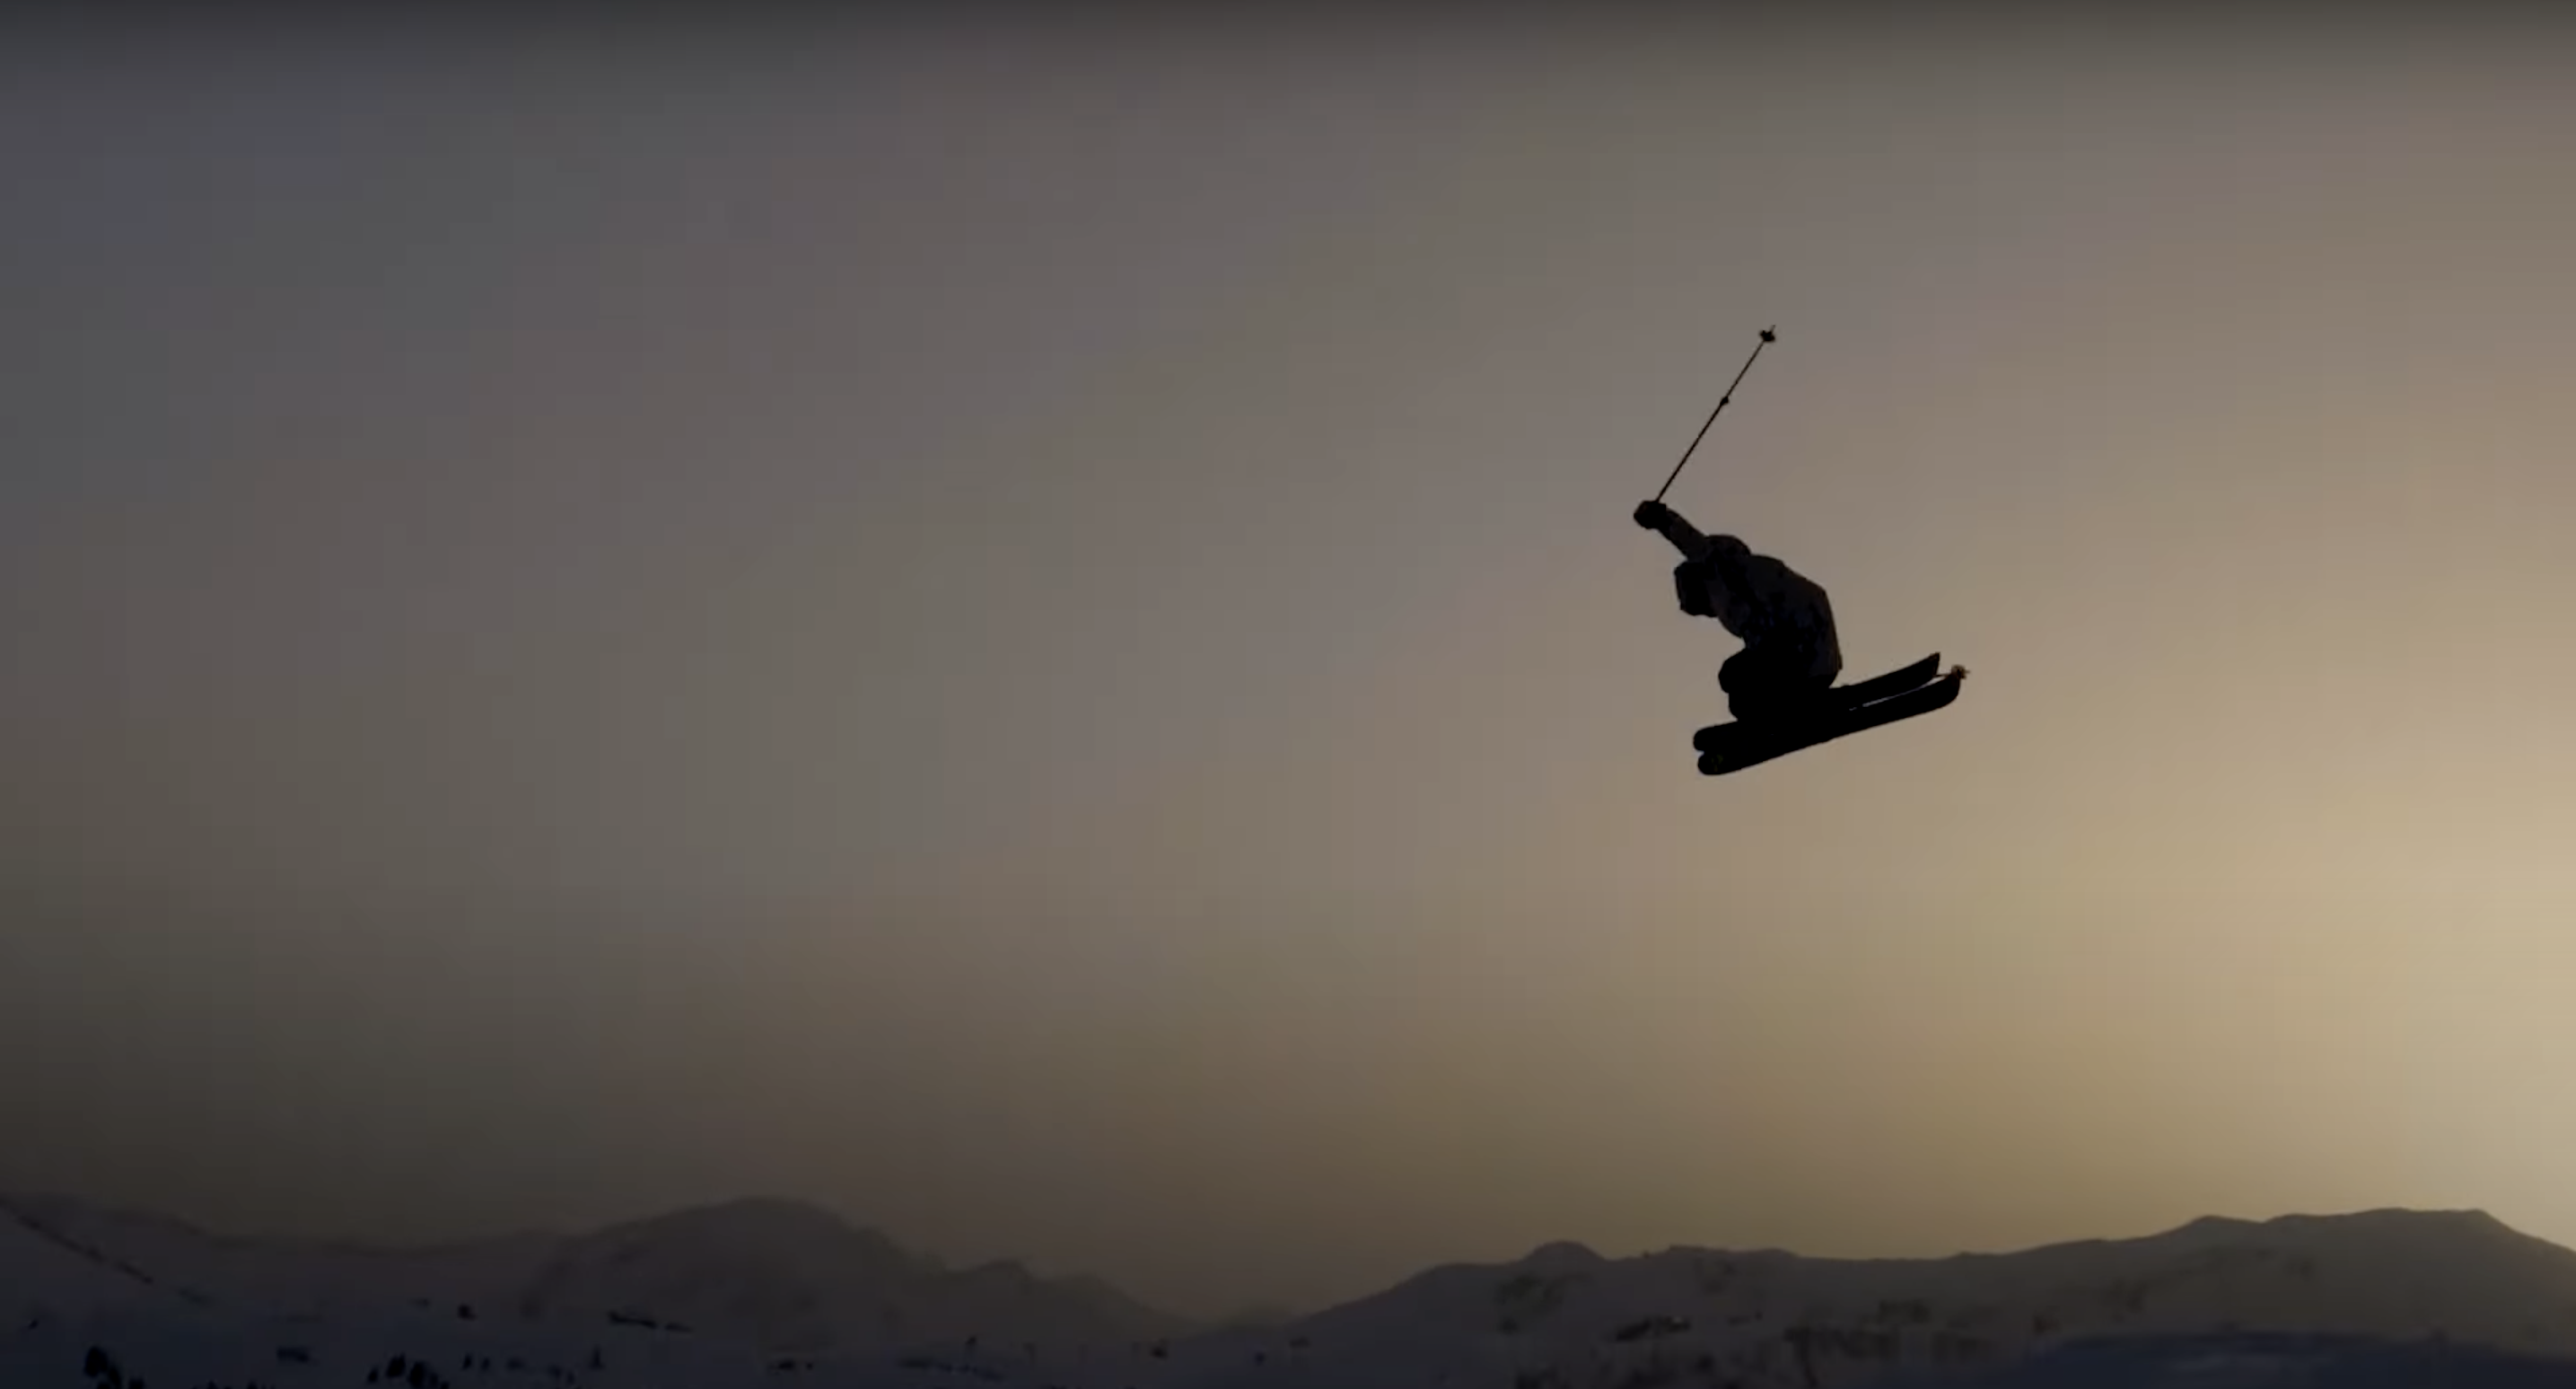 Bernhard Braun encapsulates the feeling of skiing pow in new edit